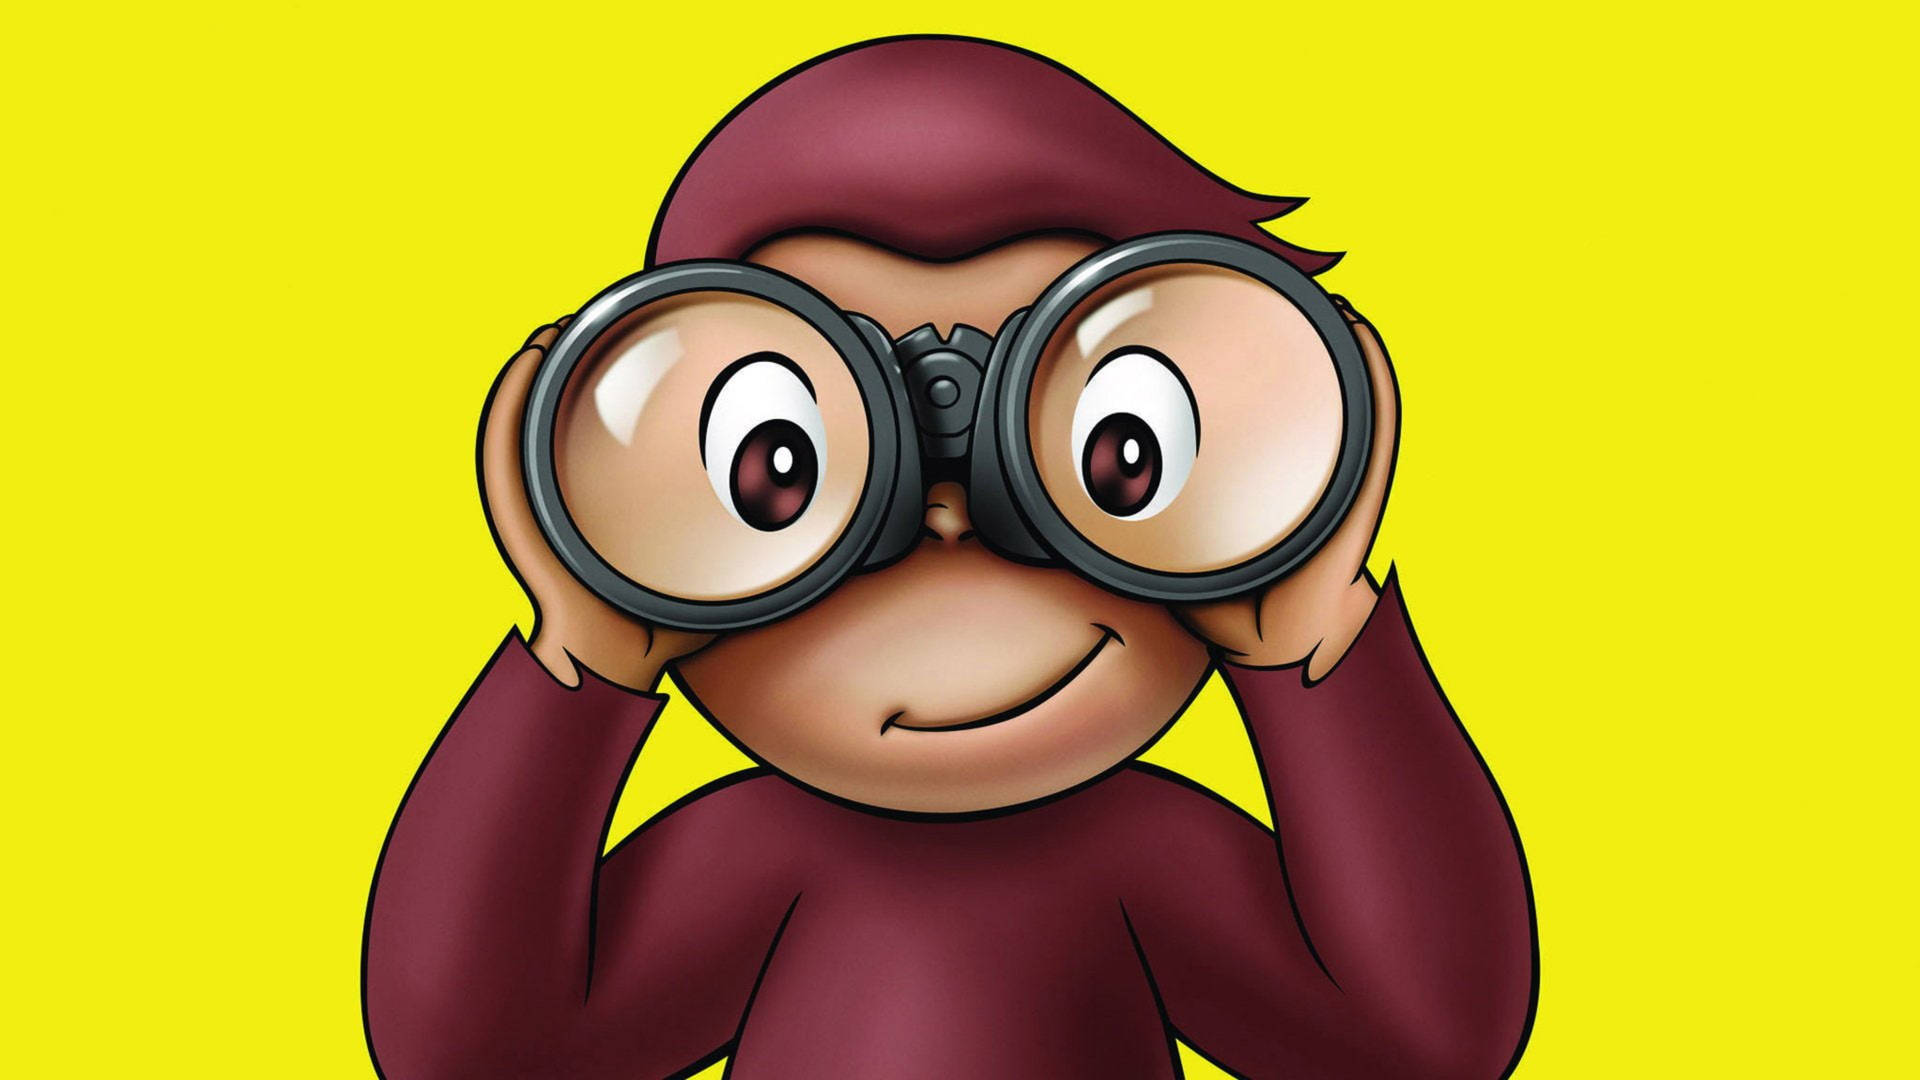 Top 999+ Monkey Wallpaper Full HD, 4K✅Free to Use